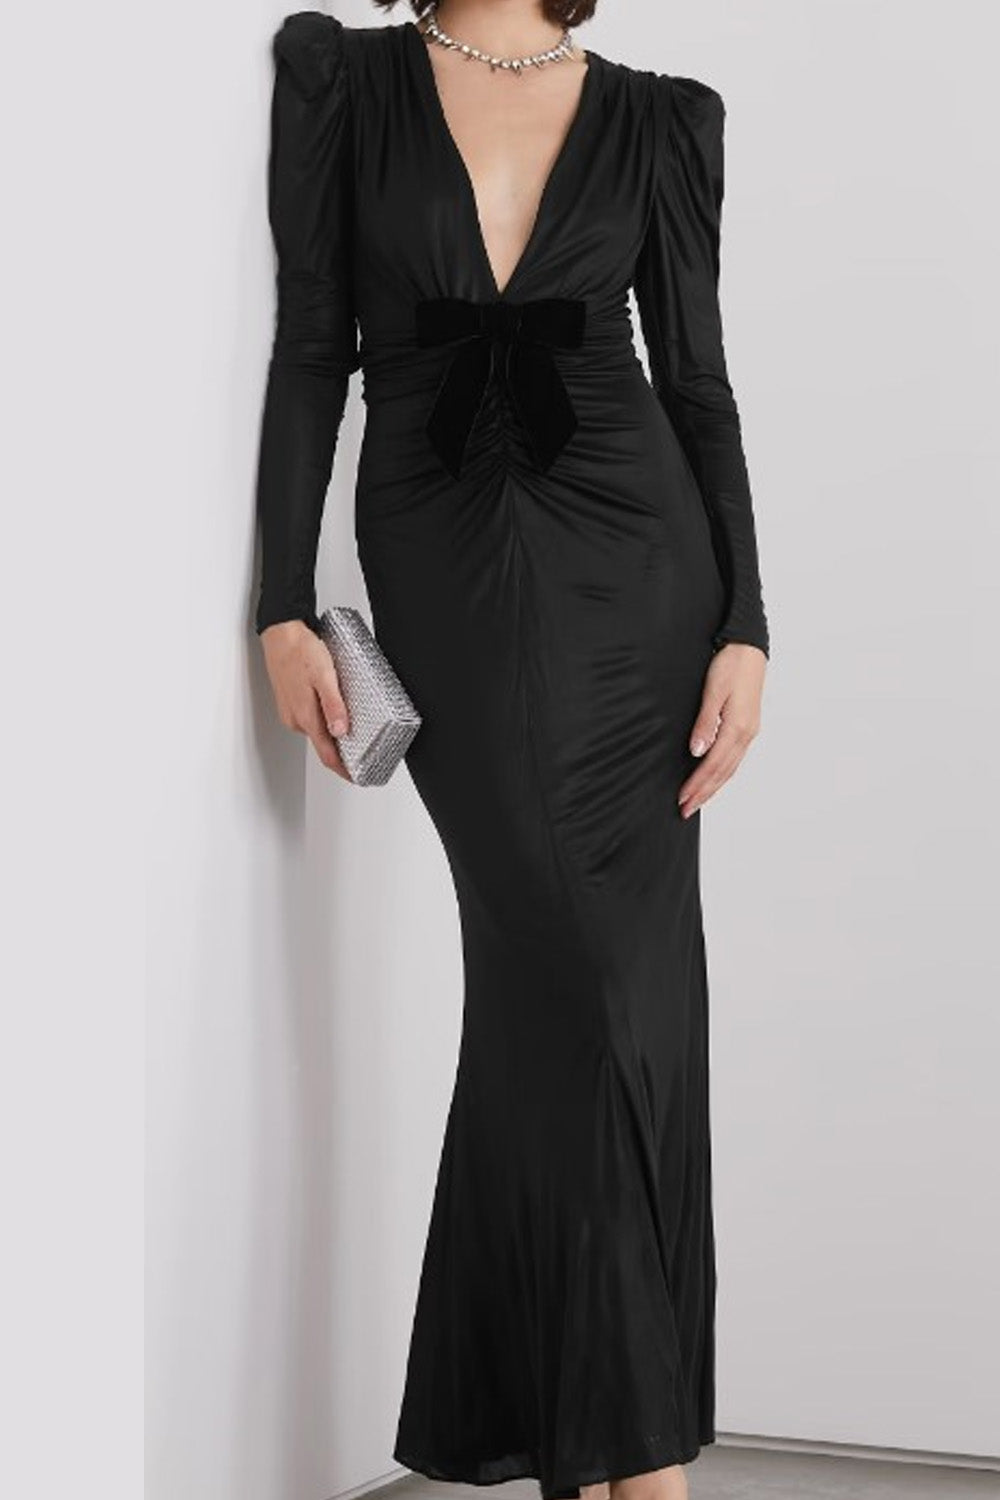 Allure Black Dress